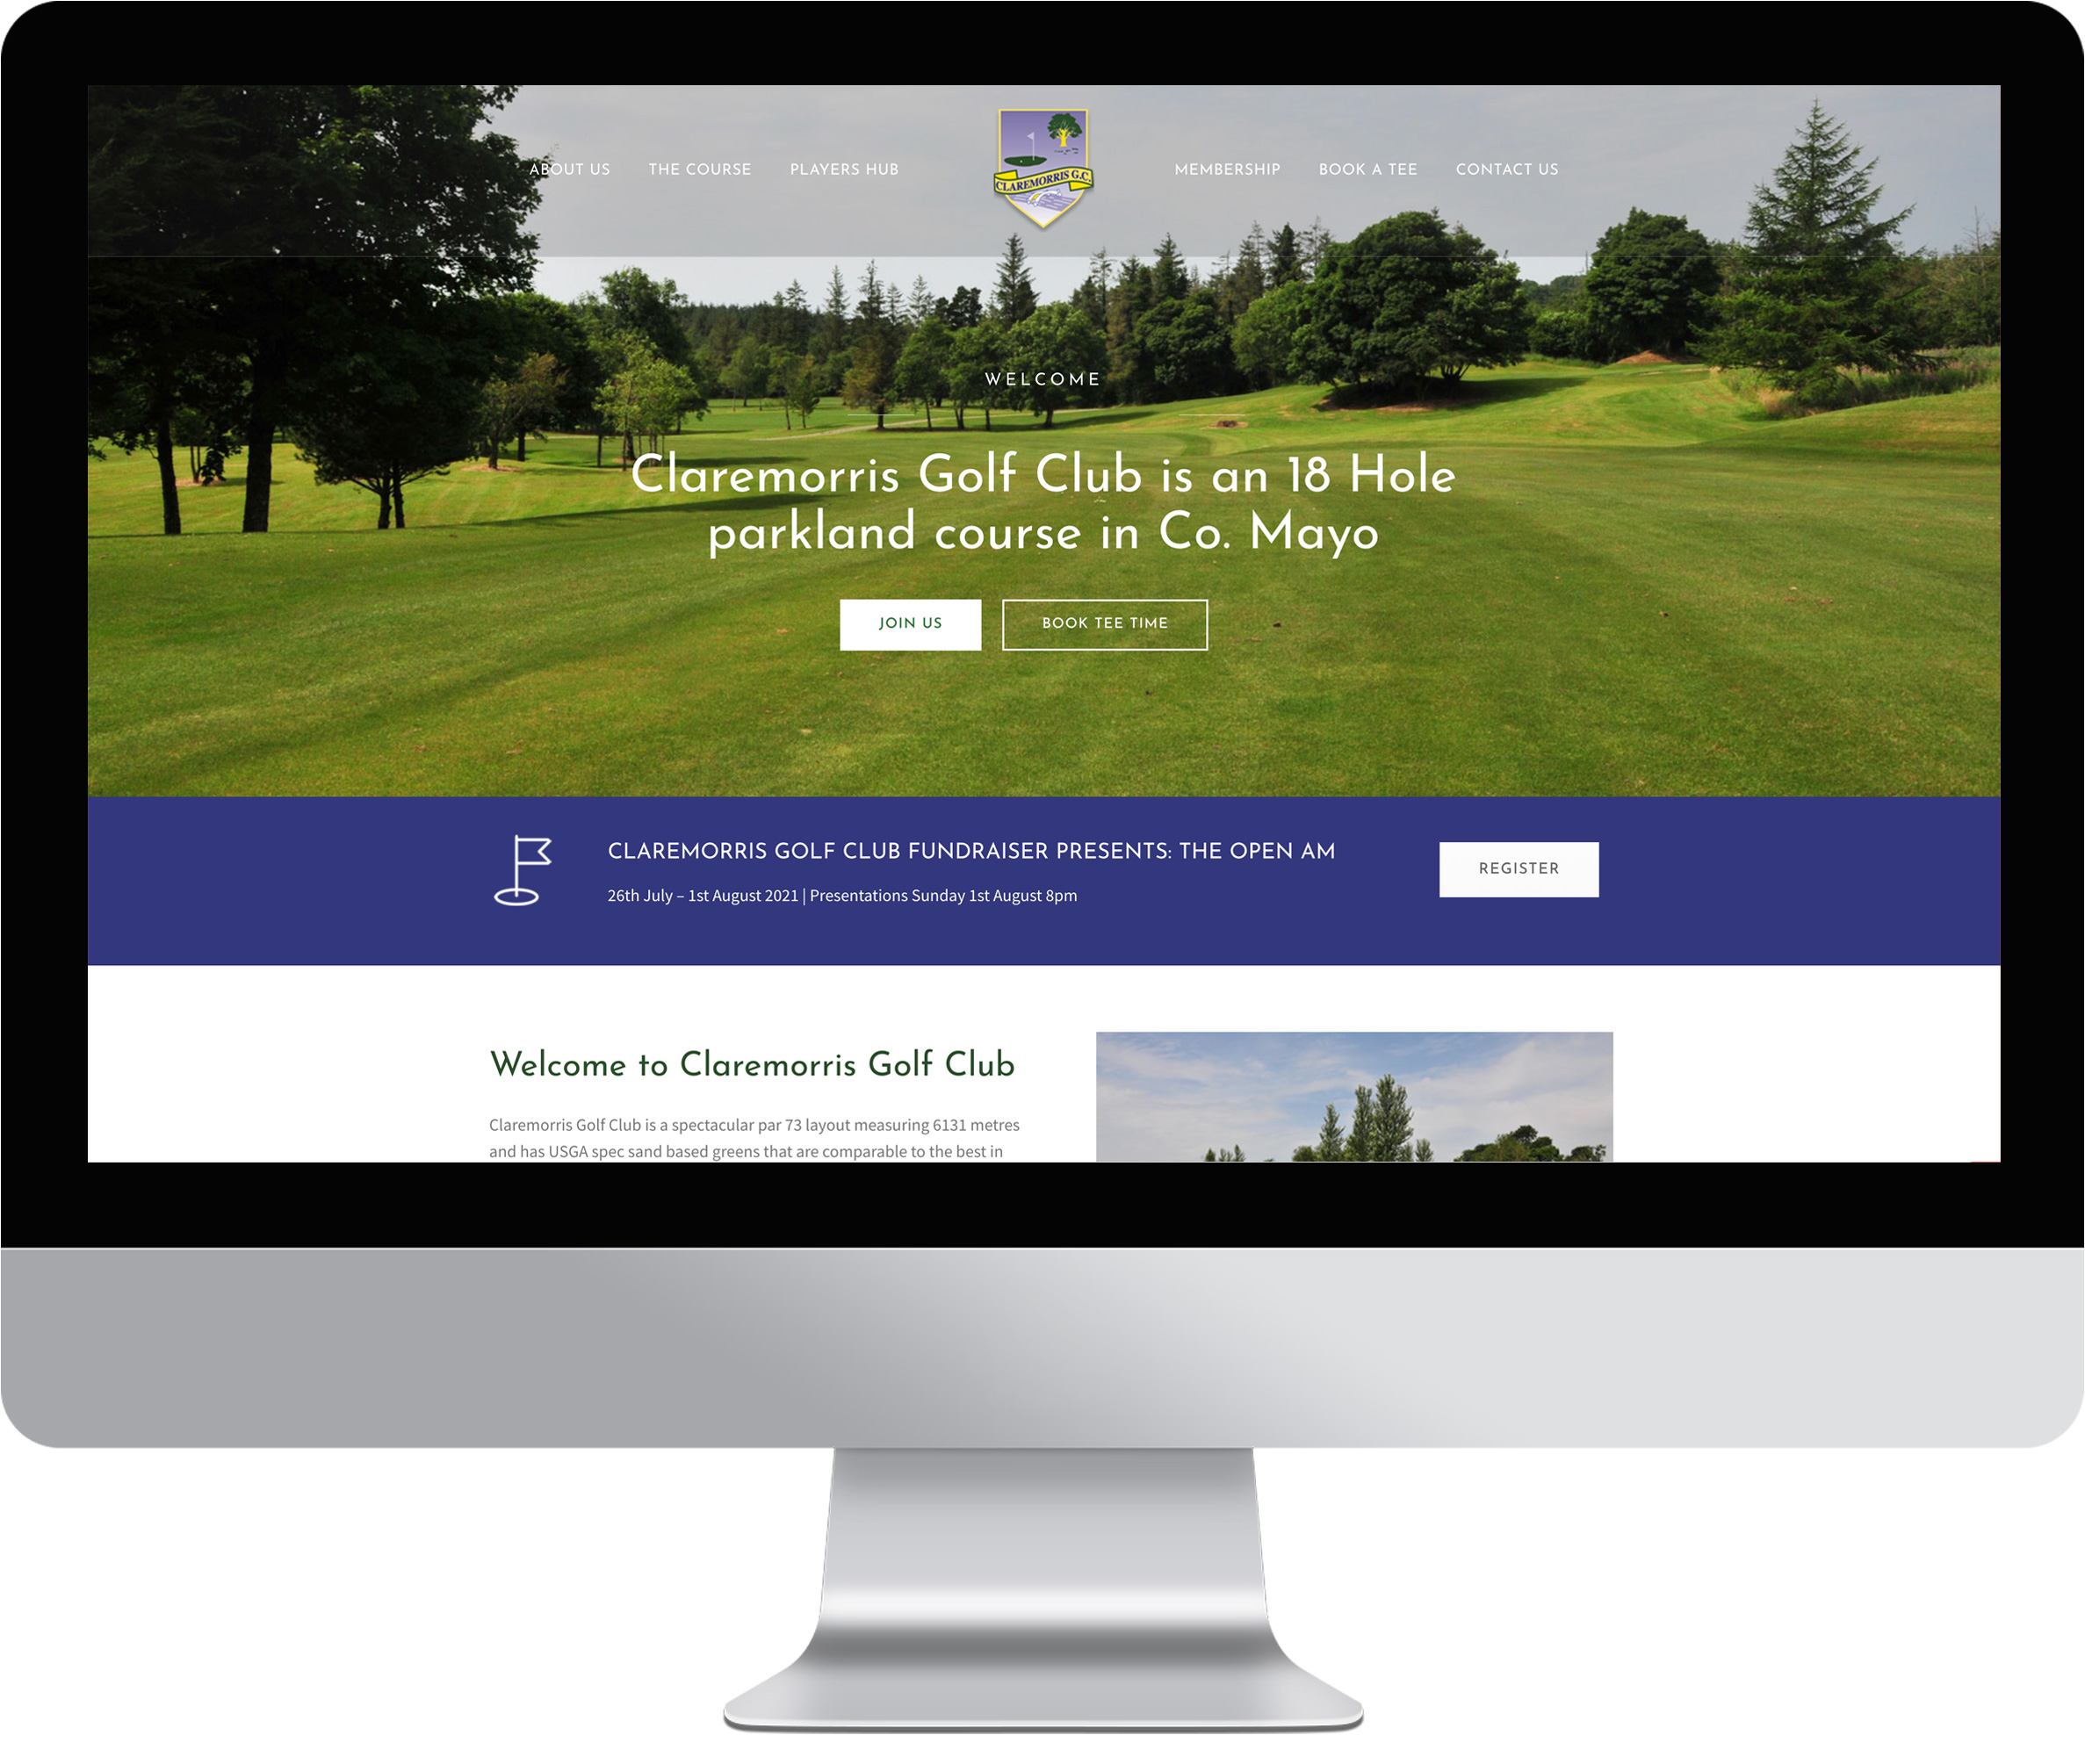 Project -Claremorris Golf Club